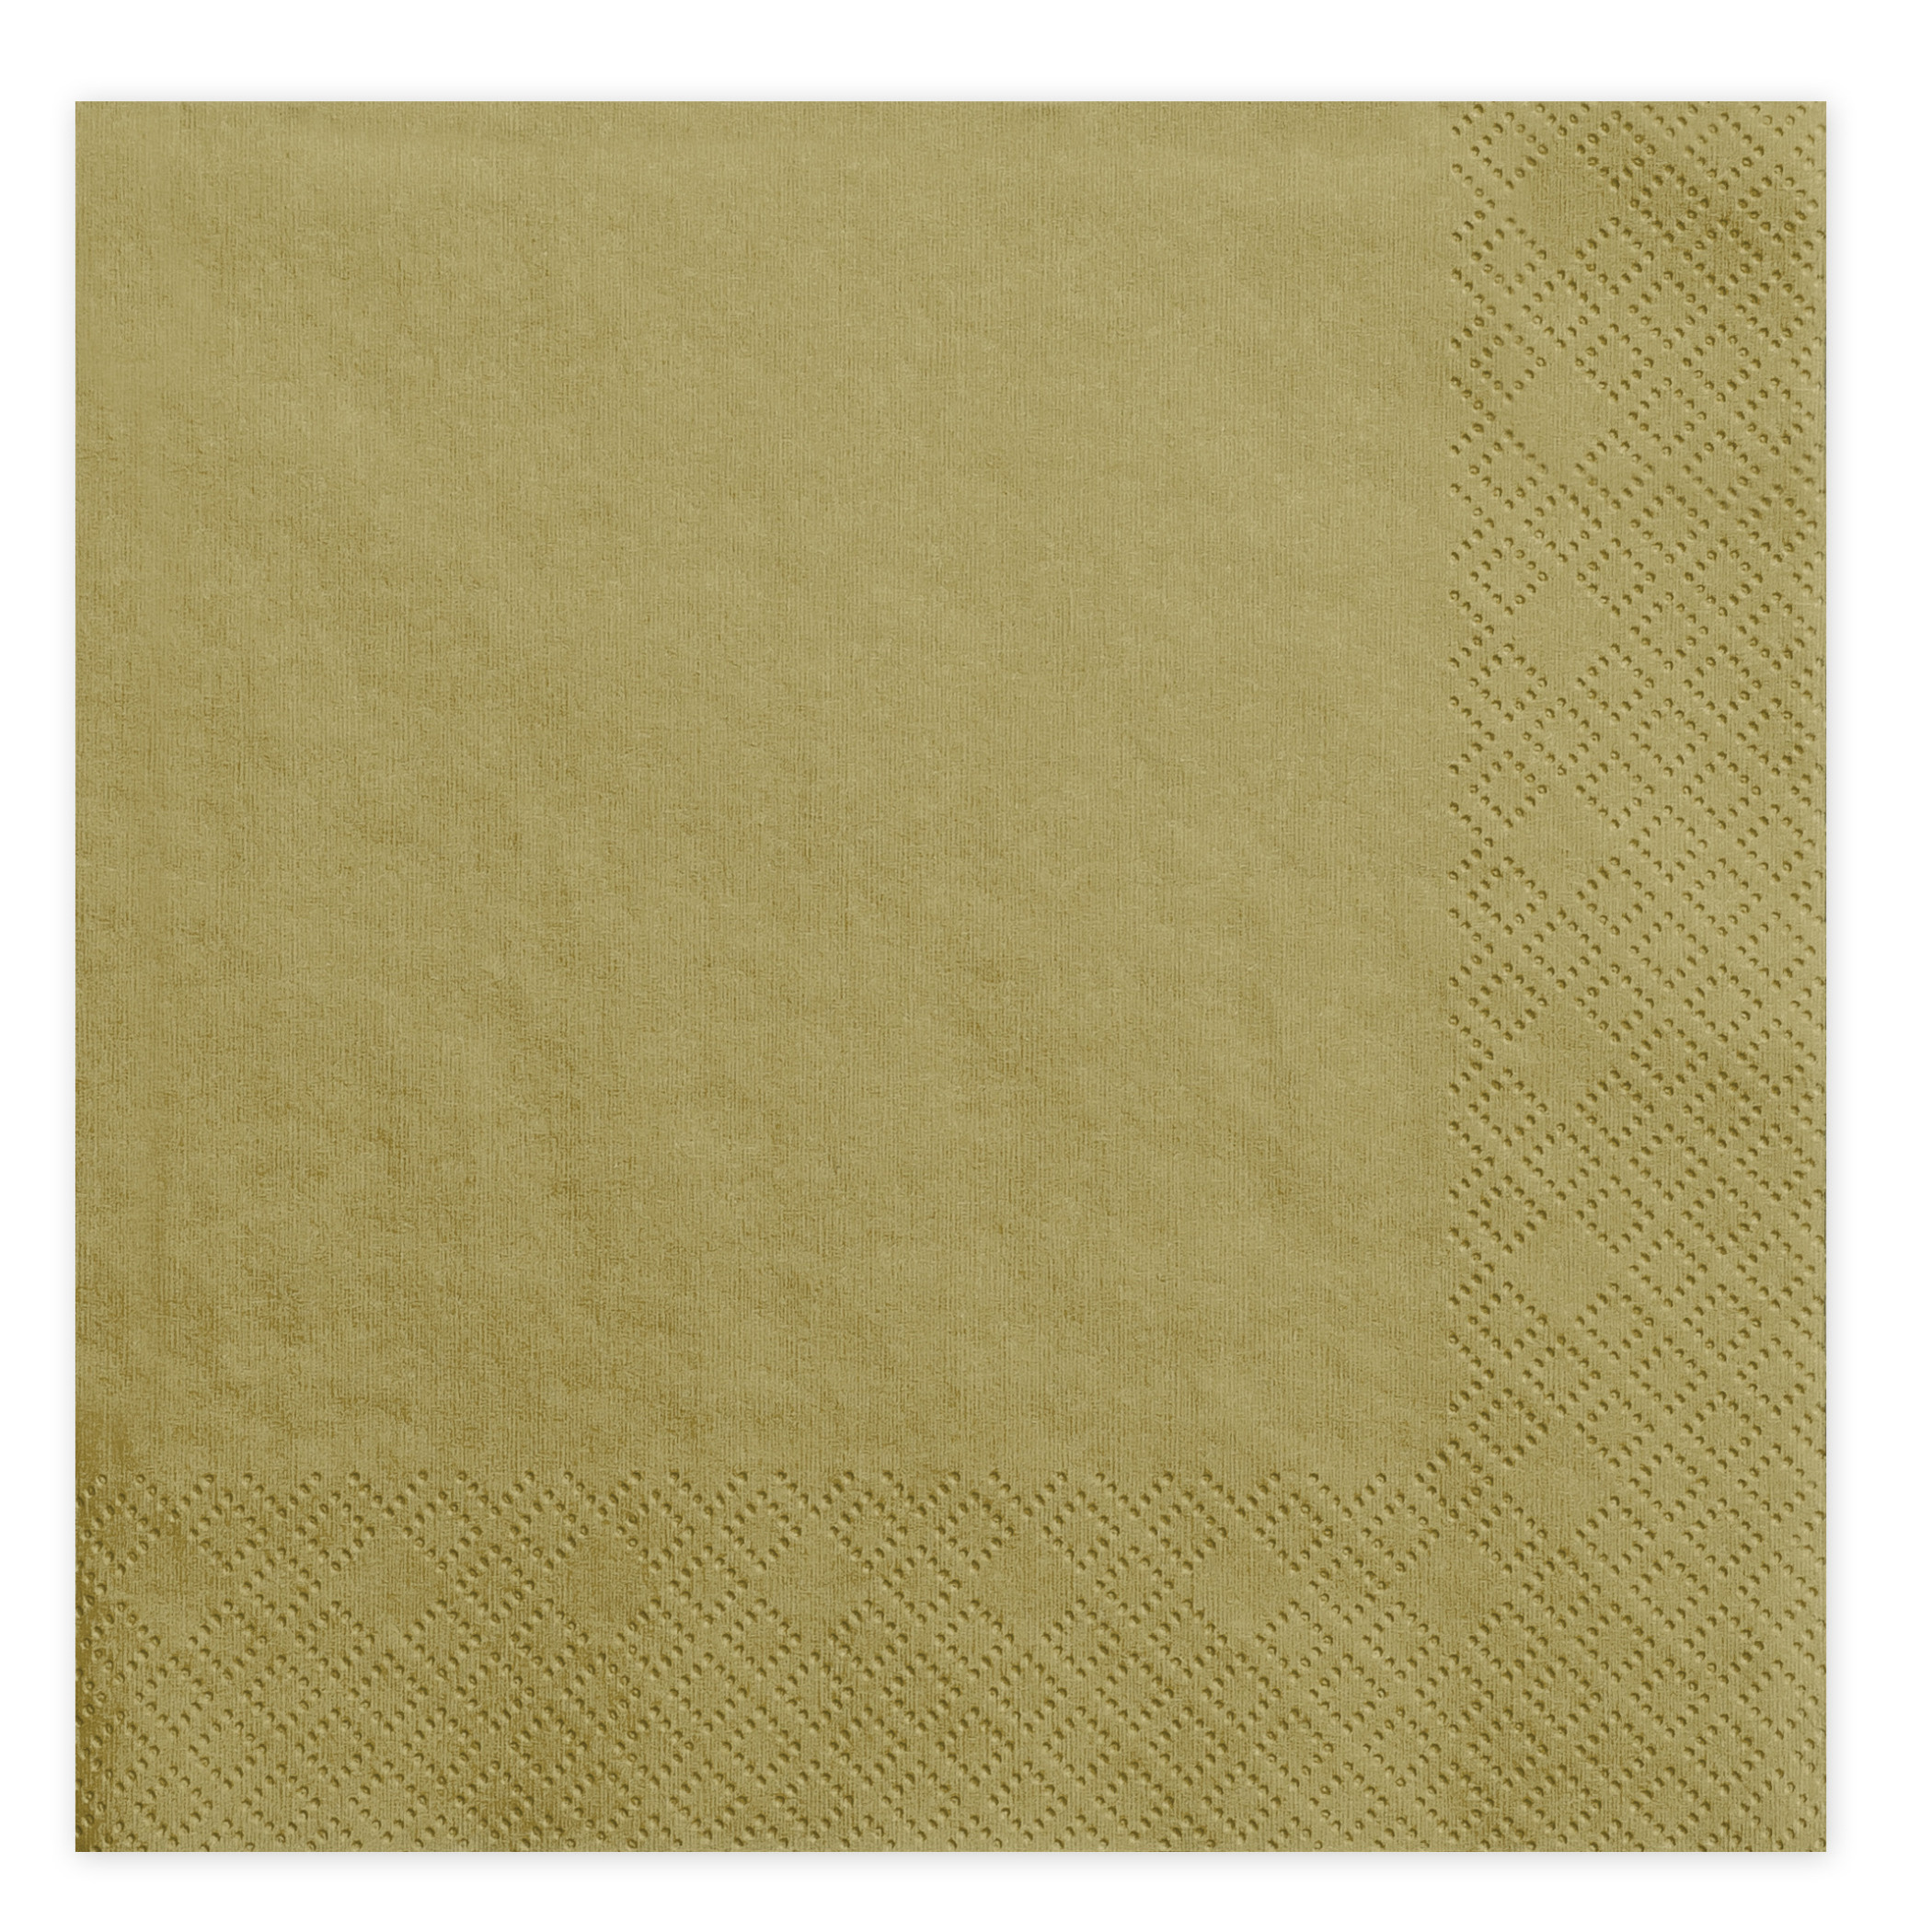 20x Papieren tafel servetten goud kleurig 33 x 33 cm